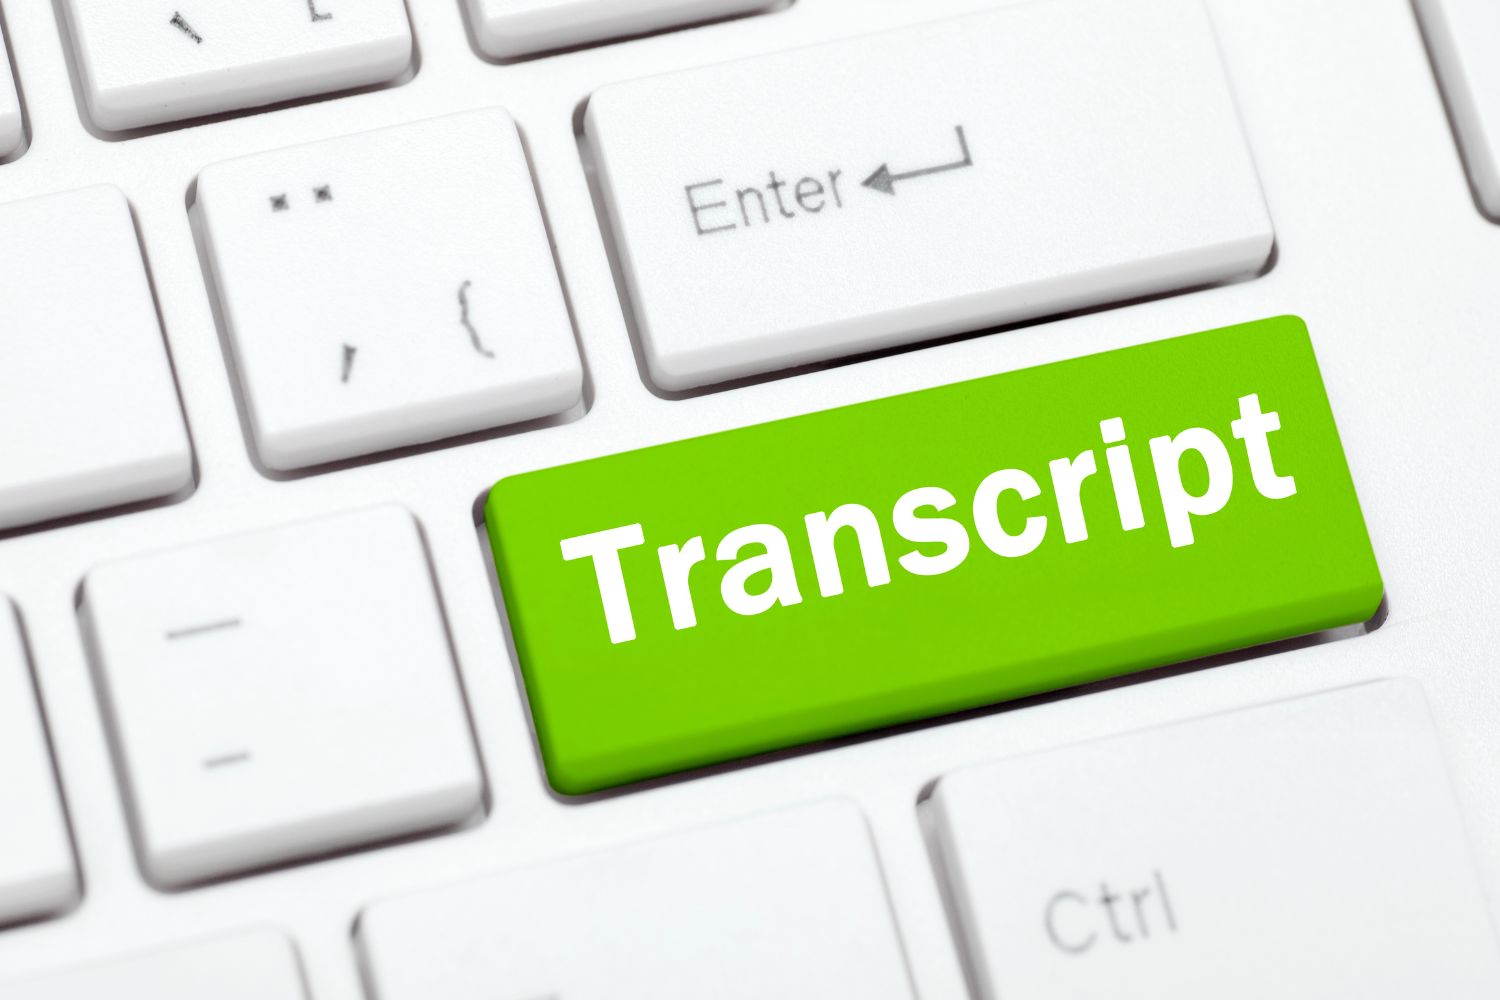 How does a transcription service help improve workflow?